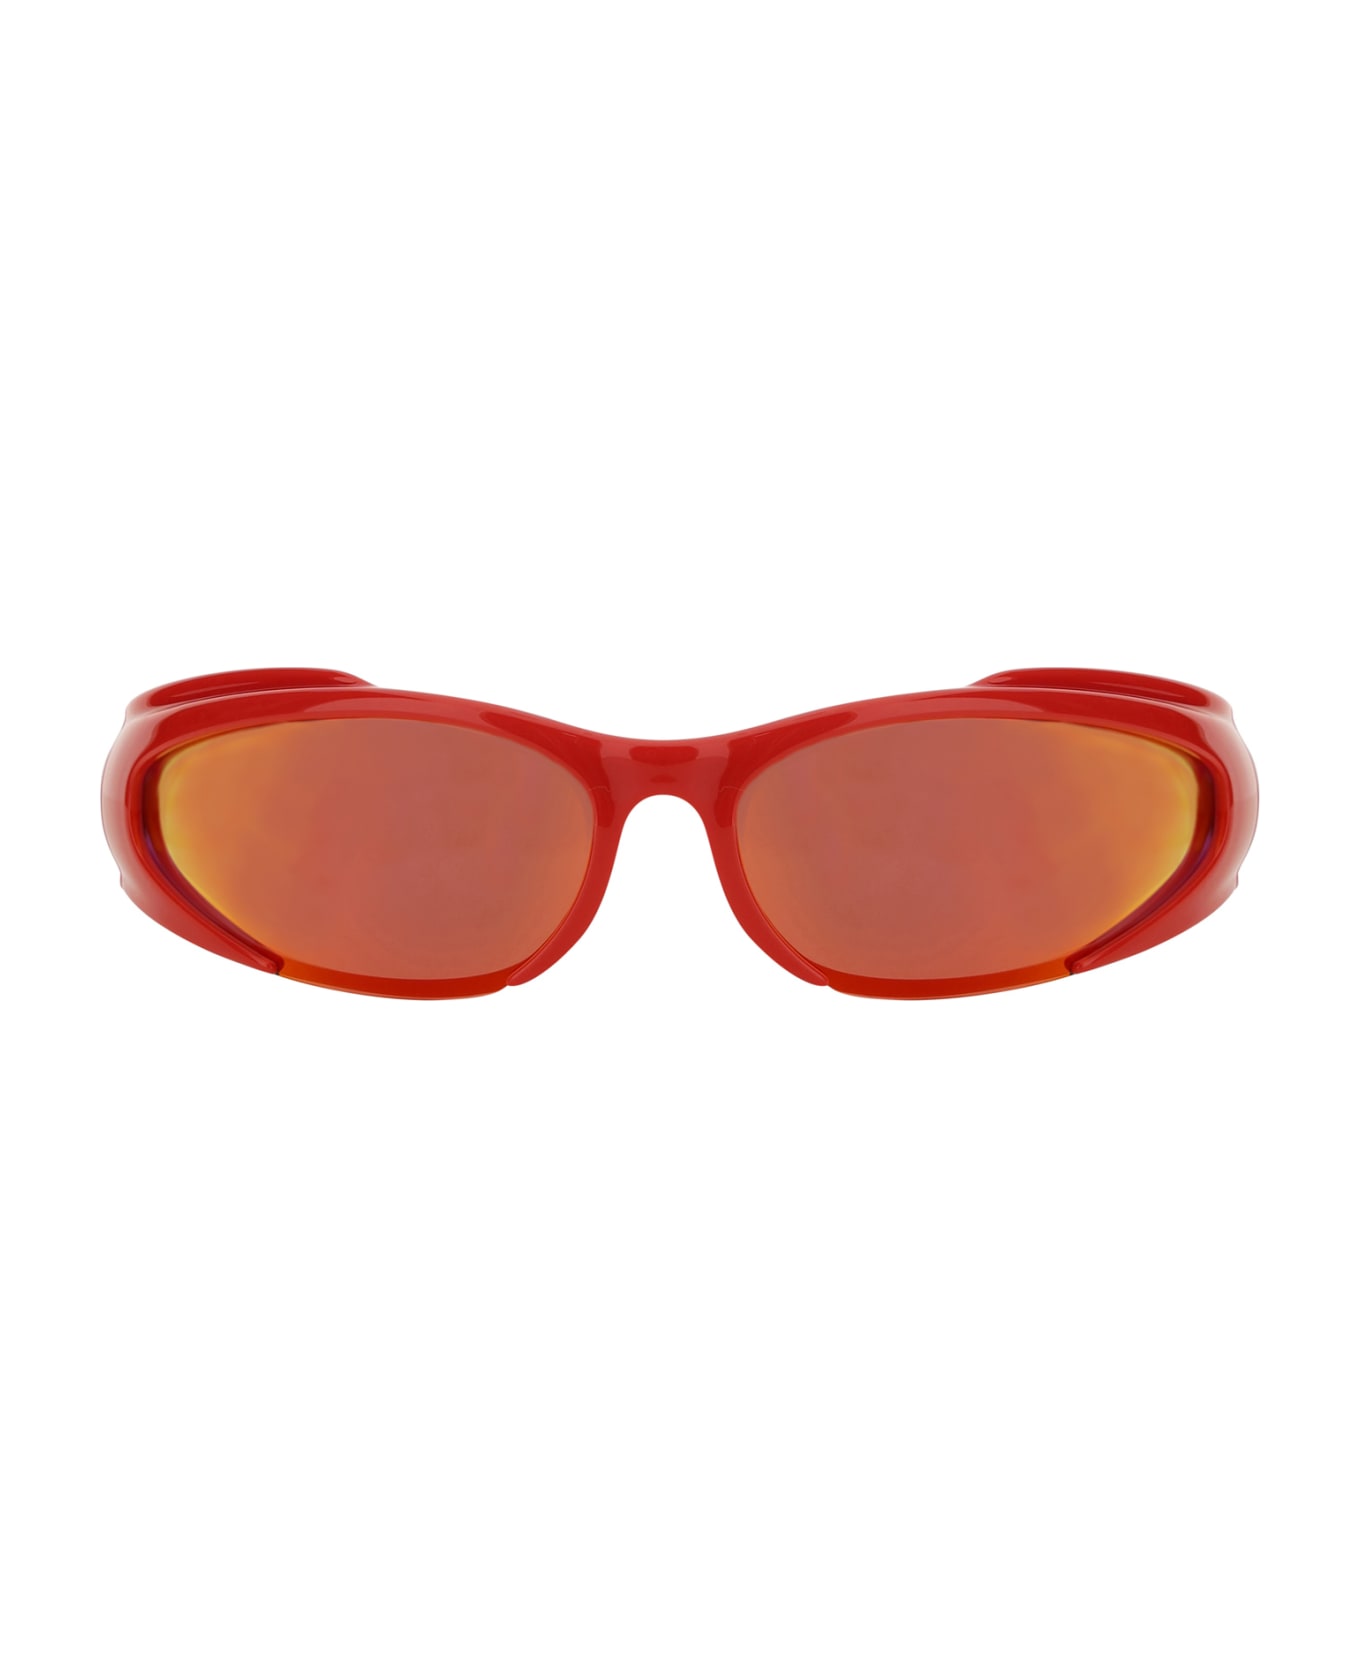 Balenciaga Eyewear Reverse Xpander Rectangle Sunglasses - Red/mirrorred